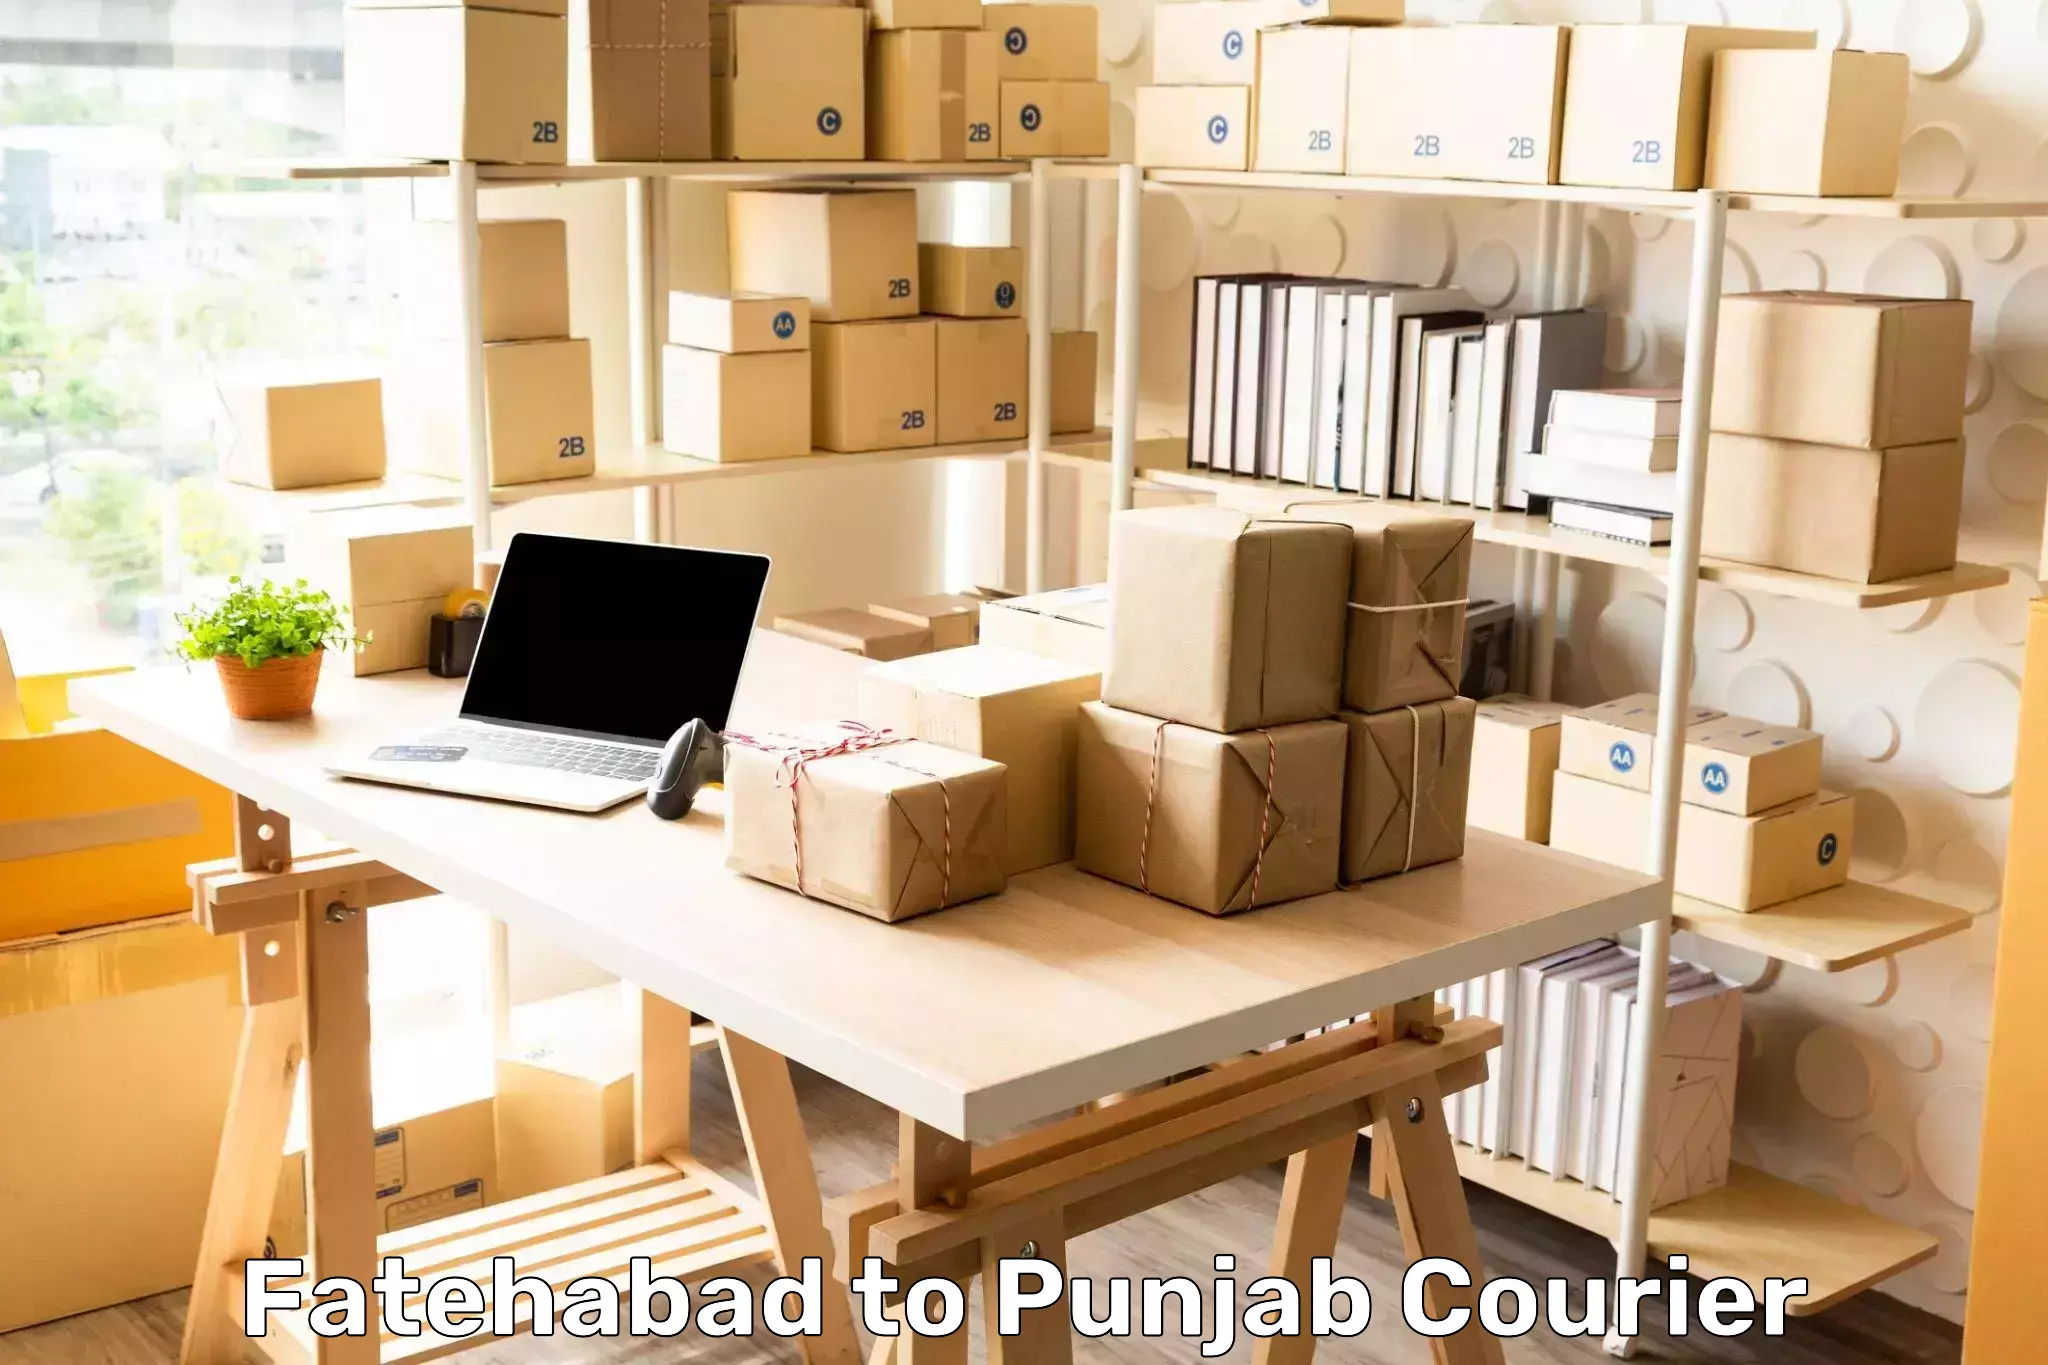 Courier service partnerships Fatehabad to Talwara